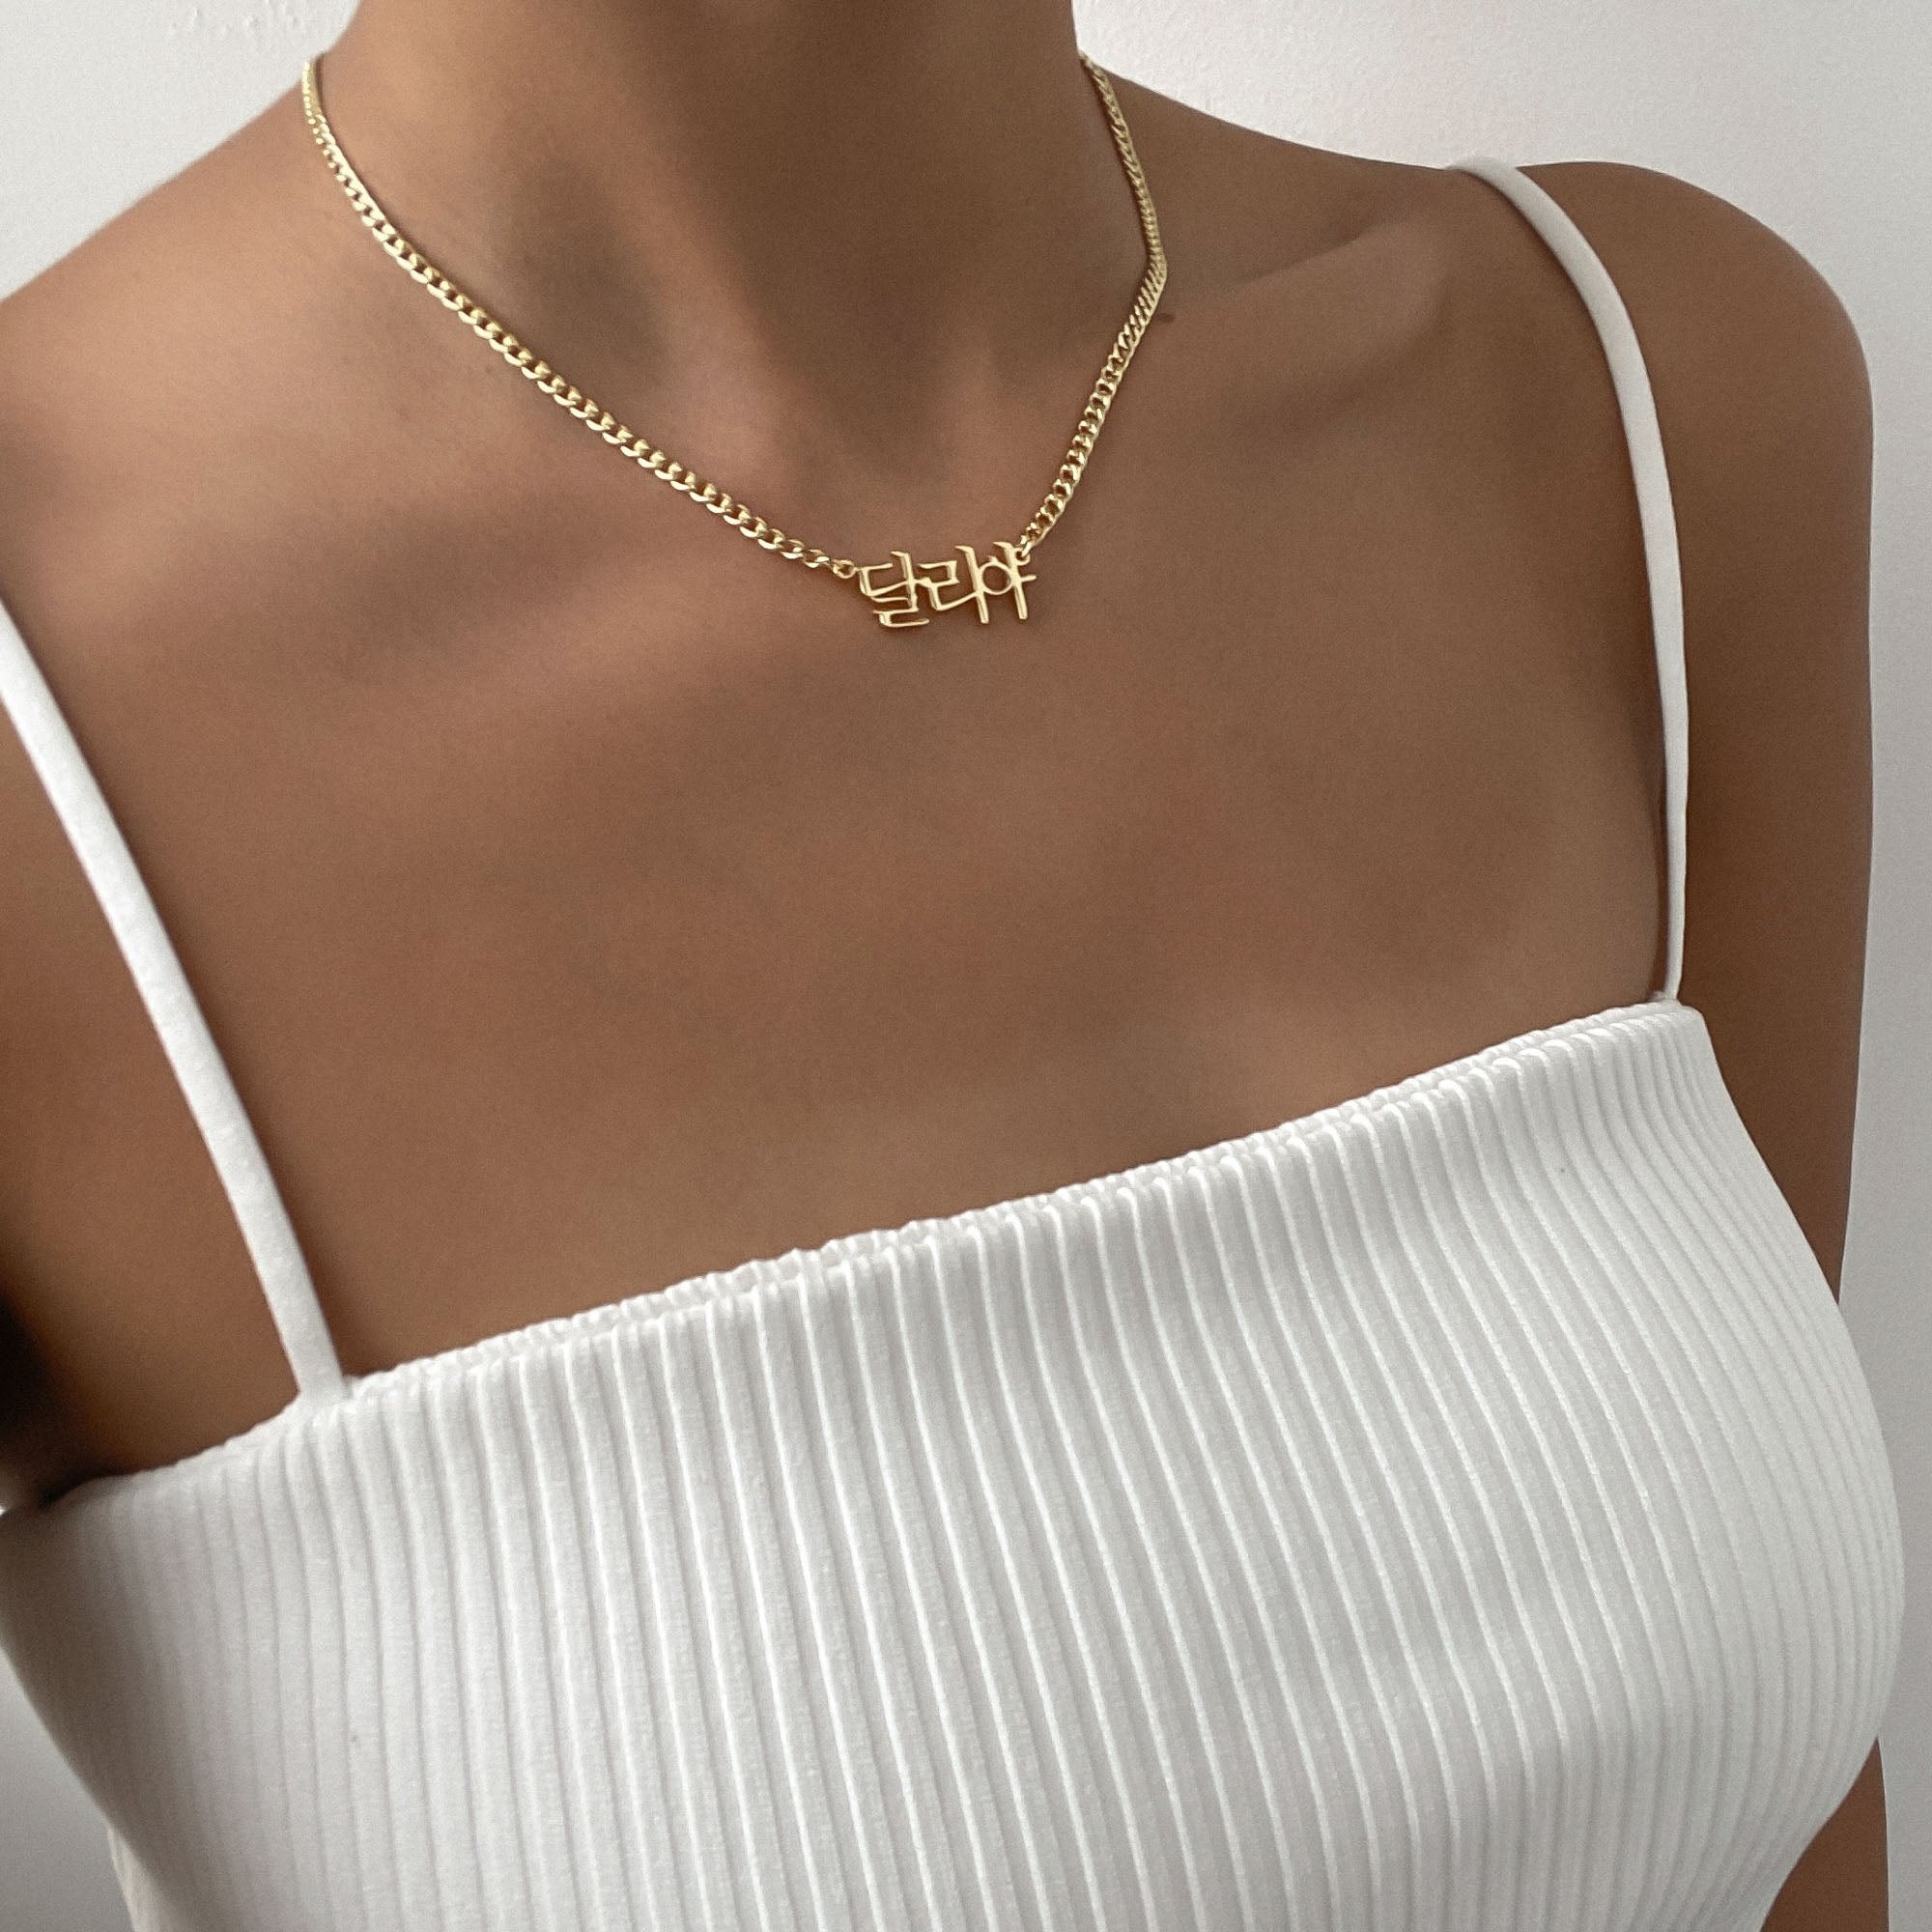 Gold Korean name necklace worn around a woman’s neck